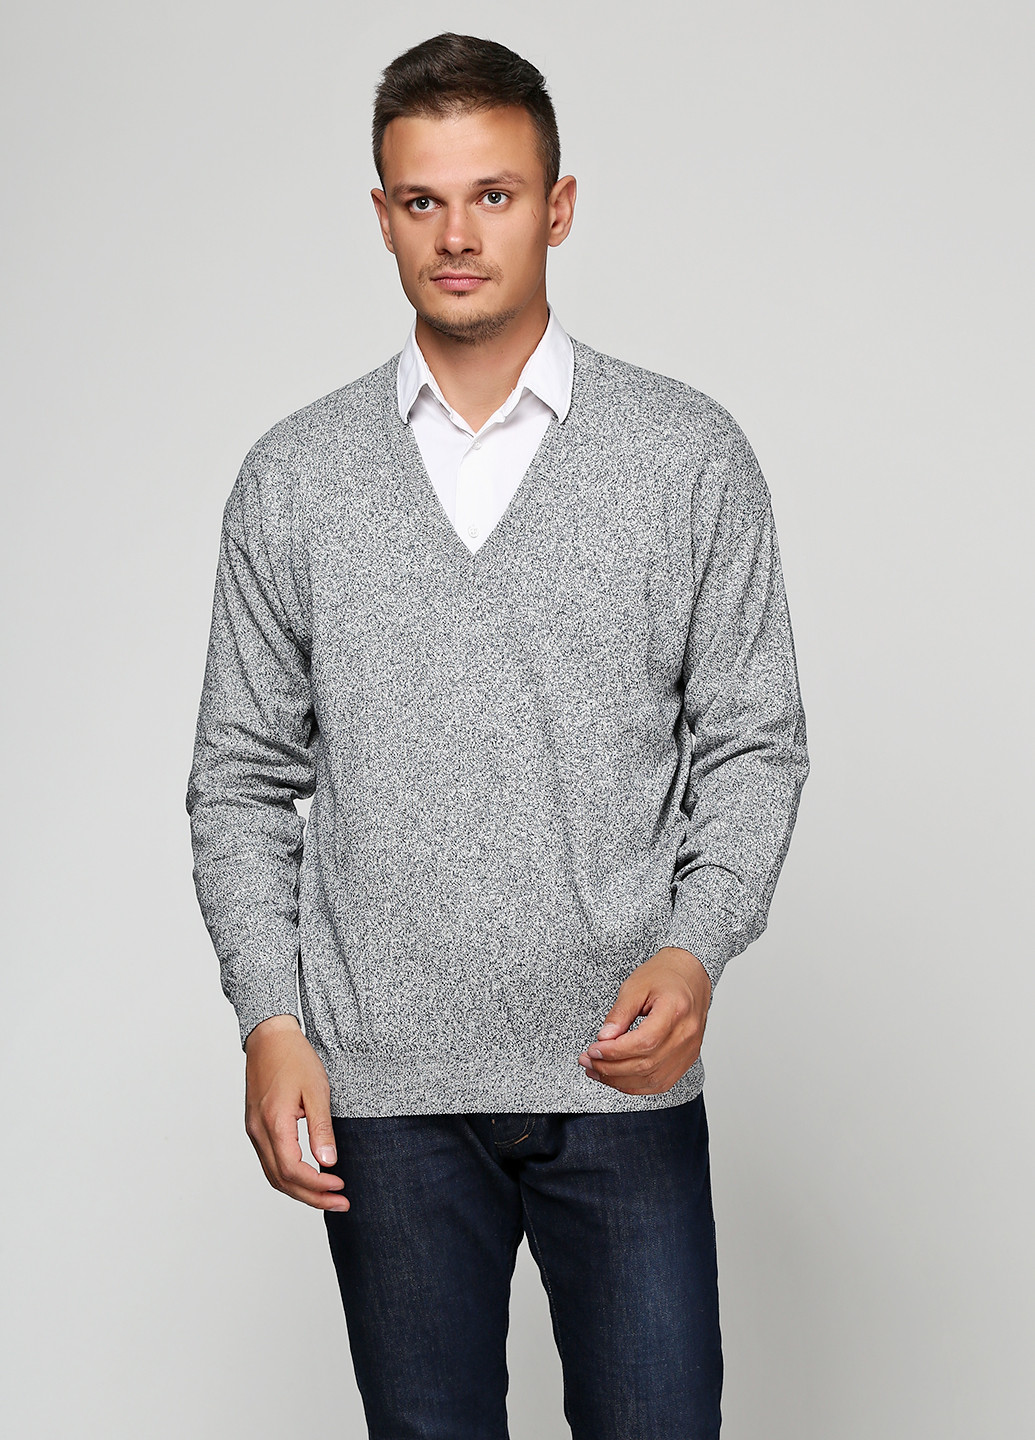 Серый демисезонный пуловер пуловер Luca D'altieri